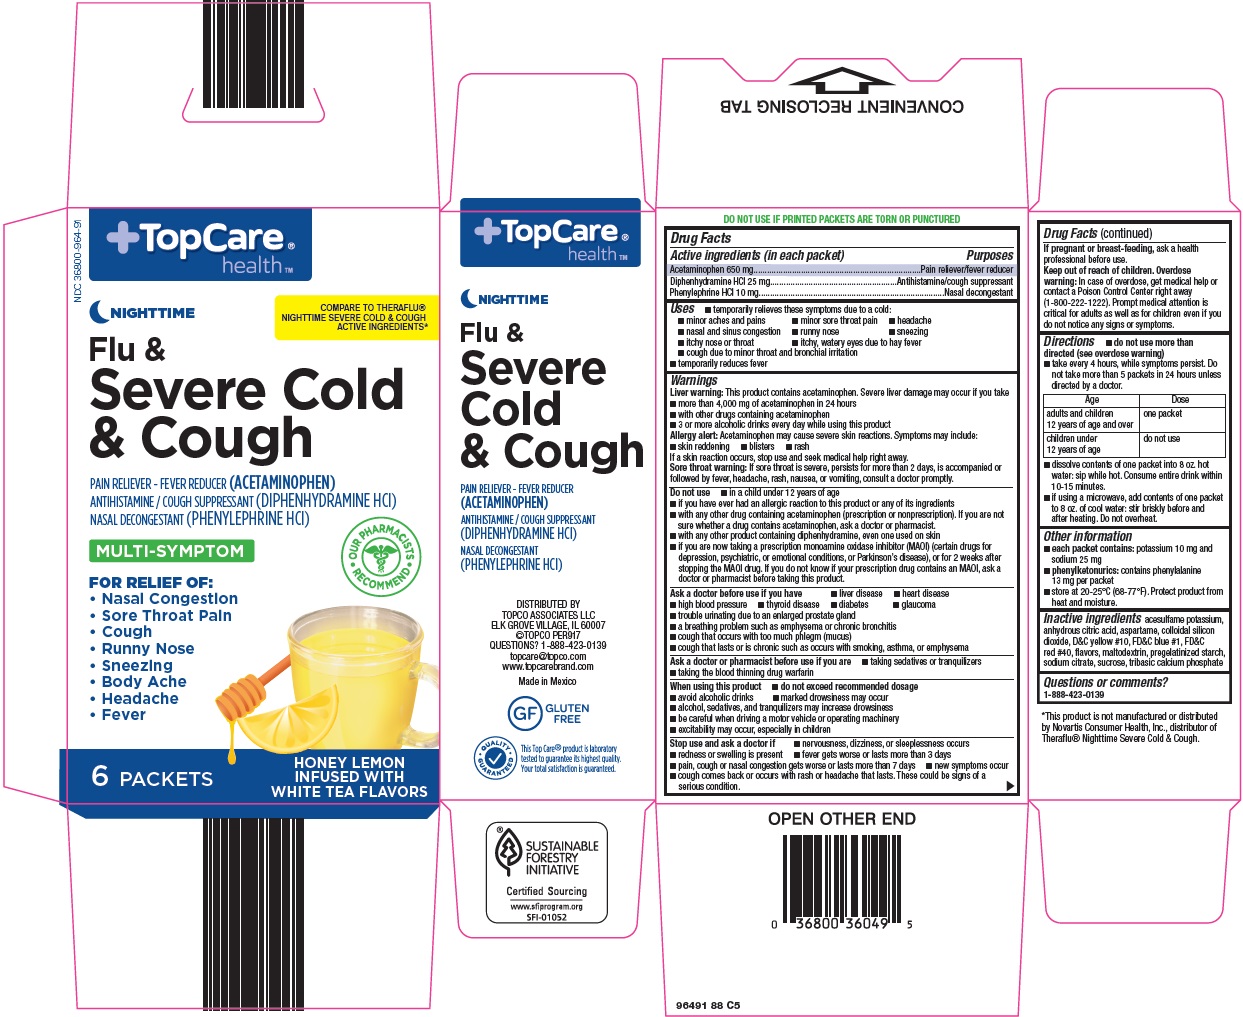 964-88-flu-&-severe-cold-&-cough.jpg